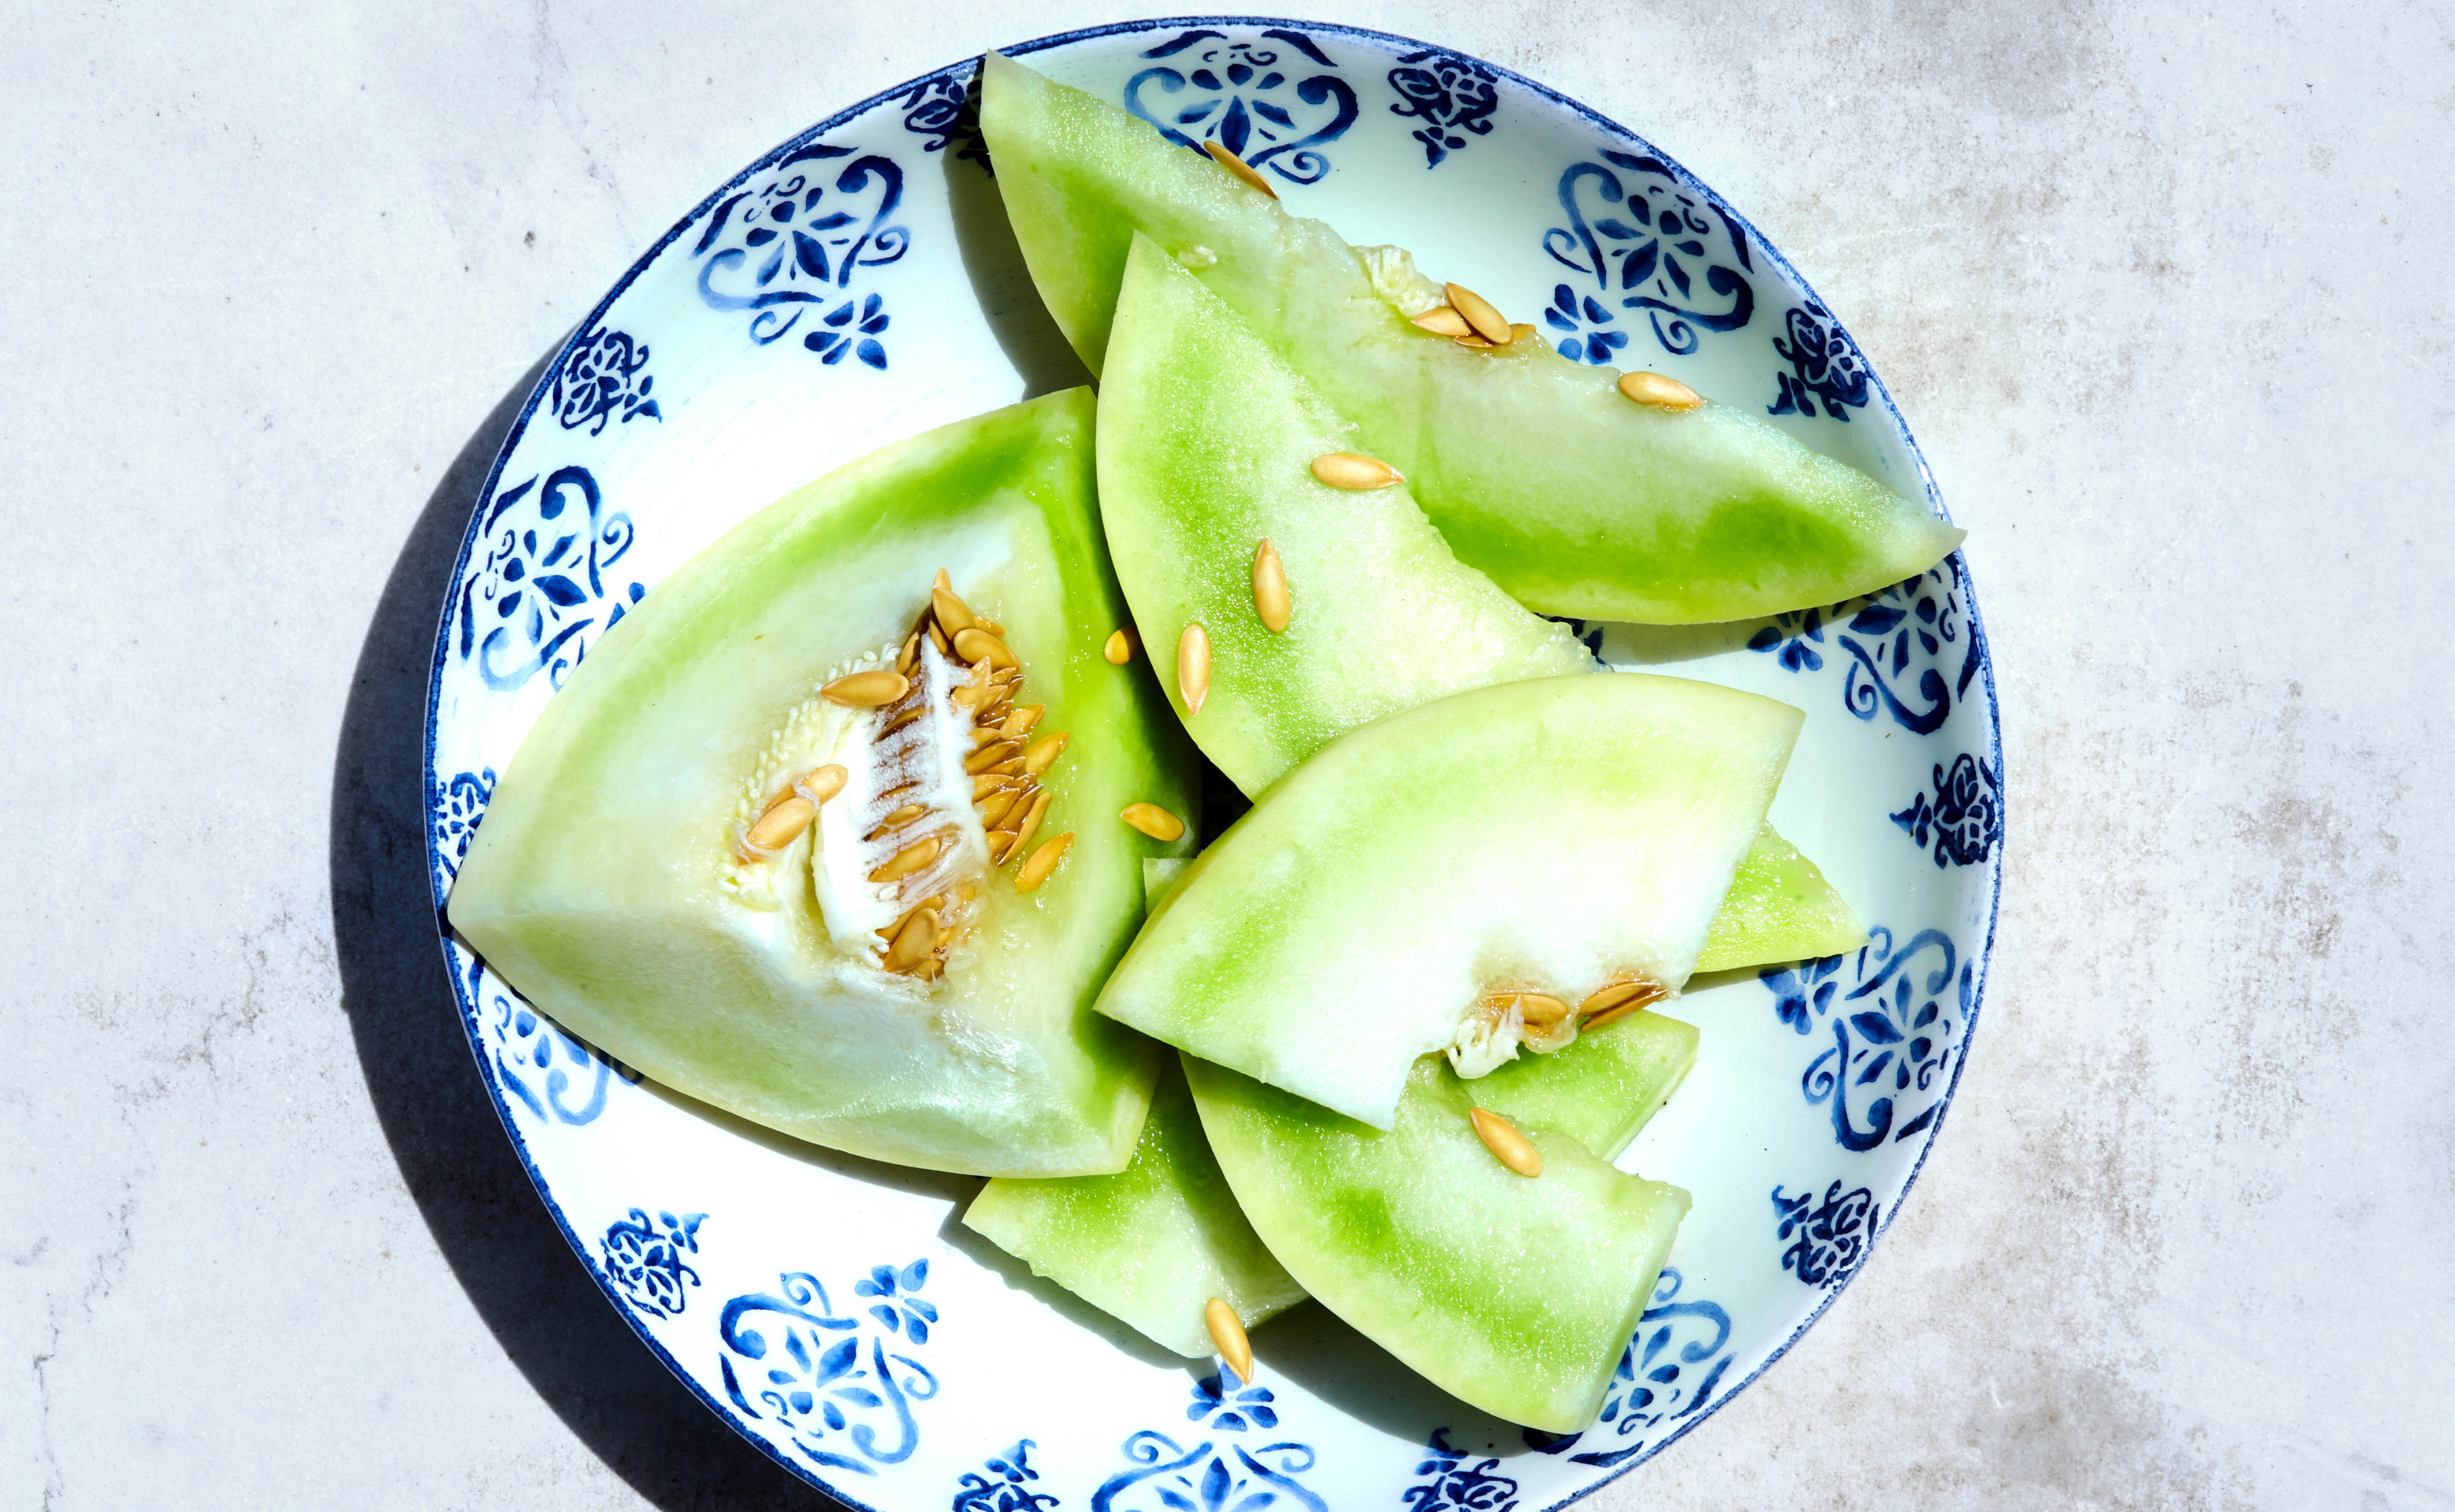 Jumbo White Honeydew Melon - 1 Piece